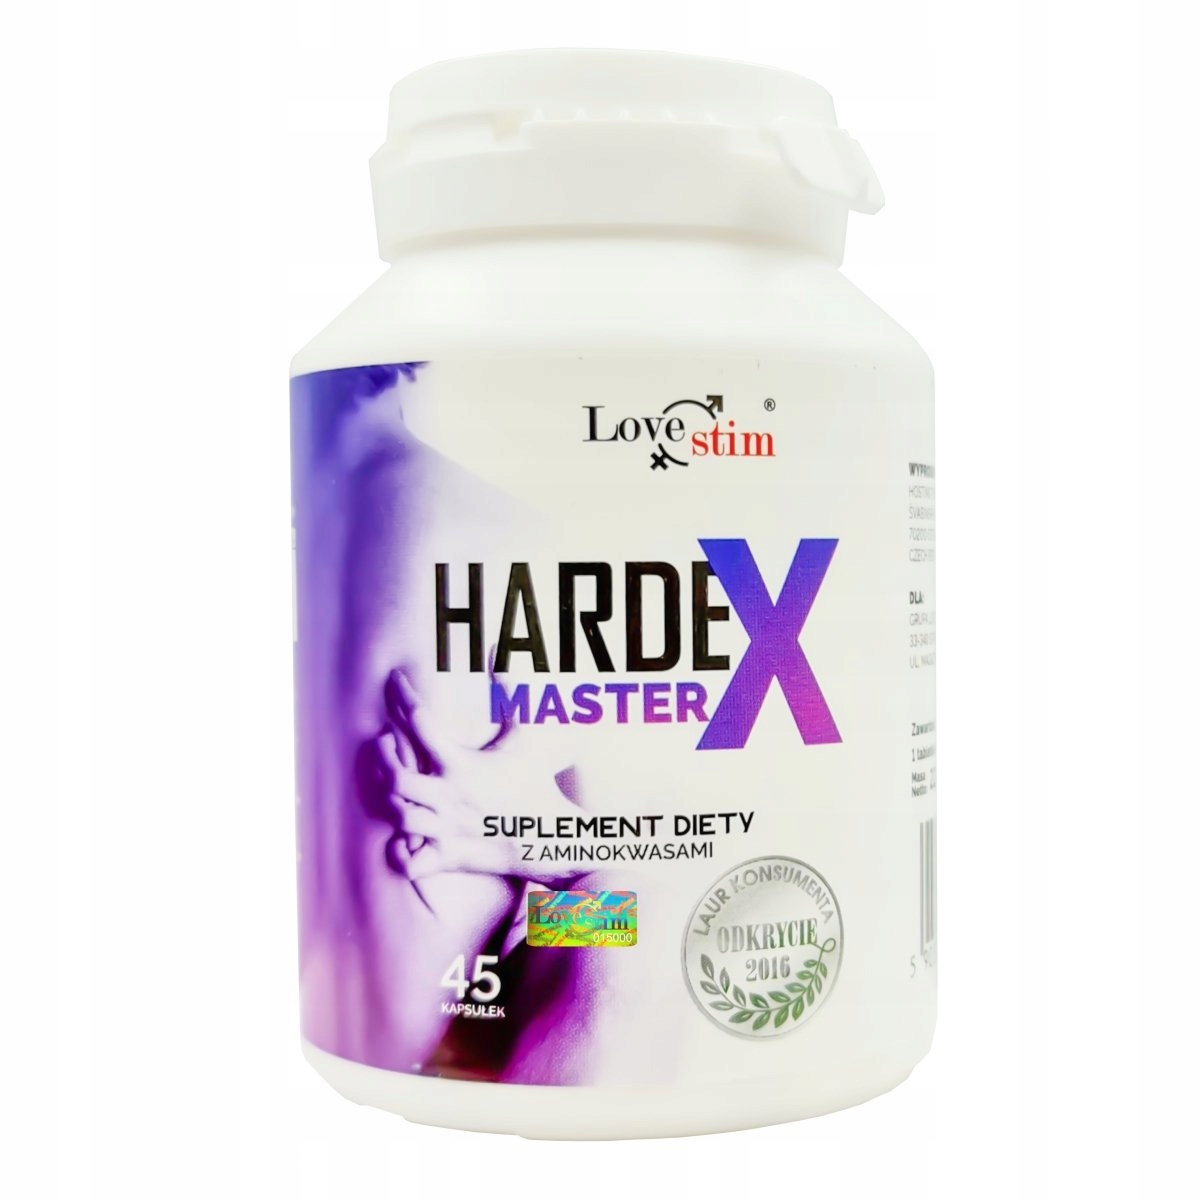 Master 45. Hardex. Hardex фото товара. Хардекс 550. Характеристики Hardex.